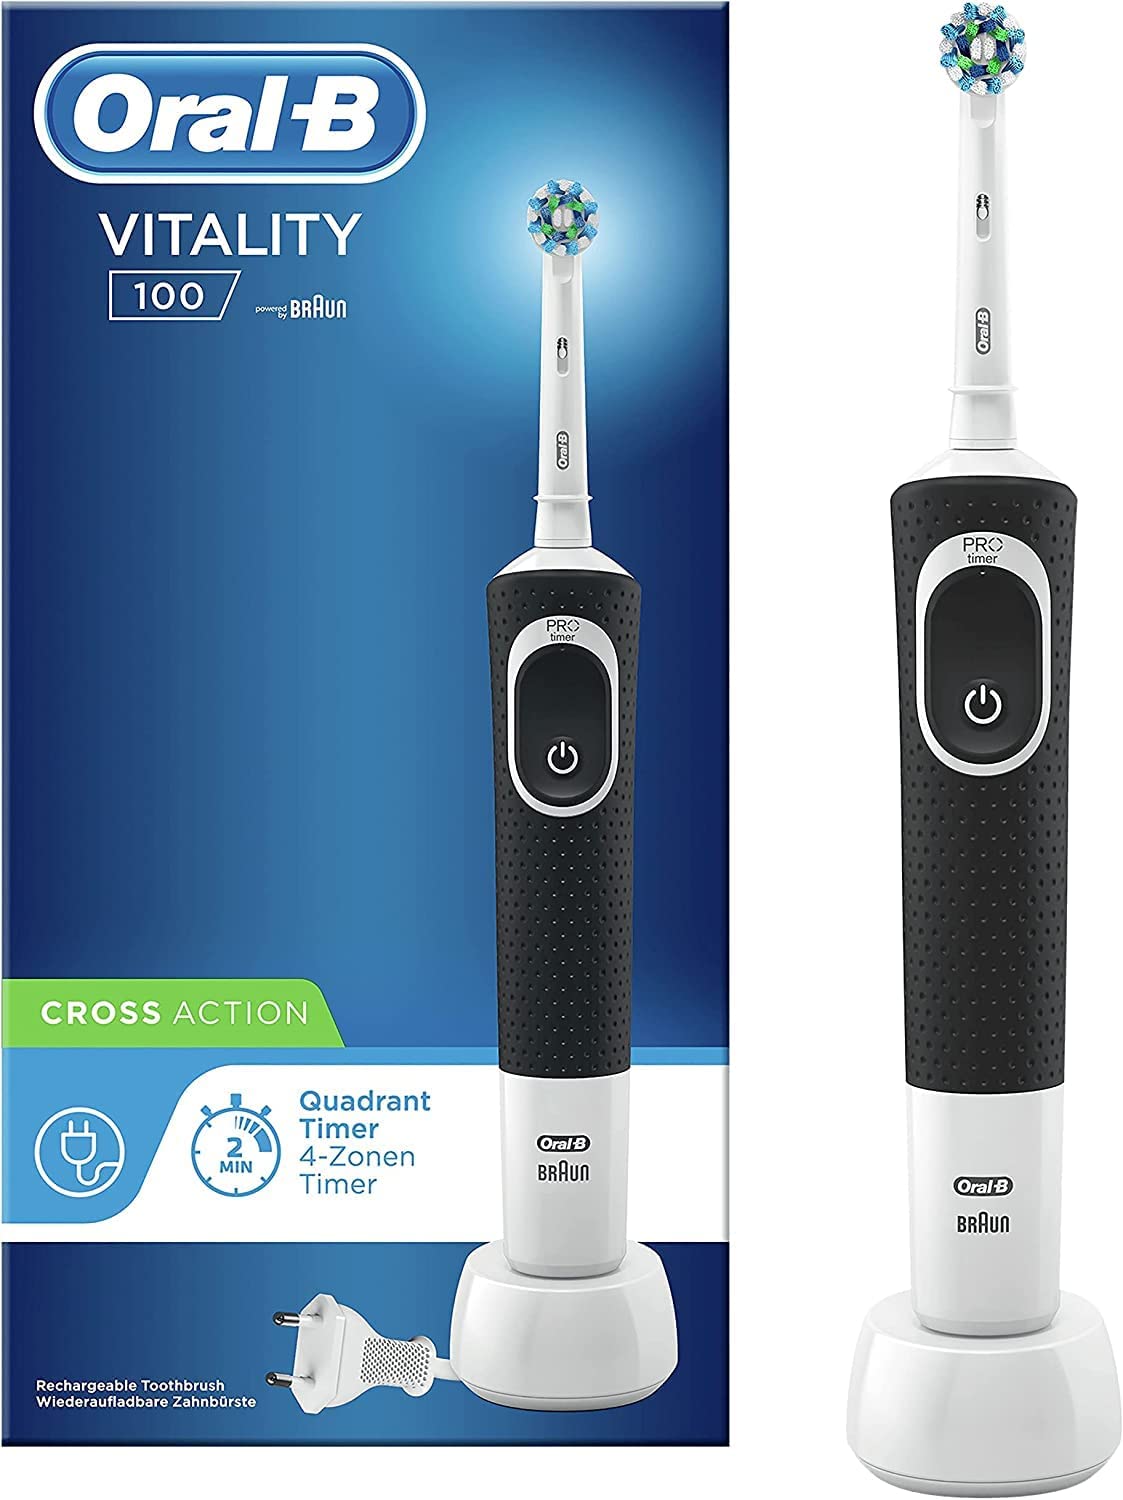 Oral-B Vitality 100 x Oral-B Vitality Pro